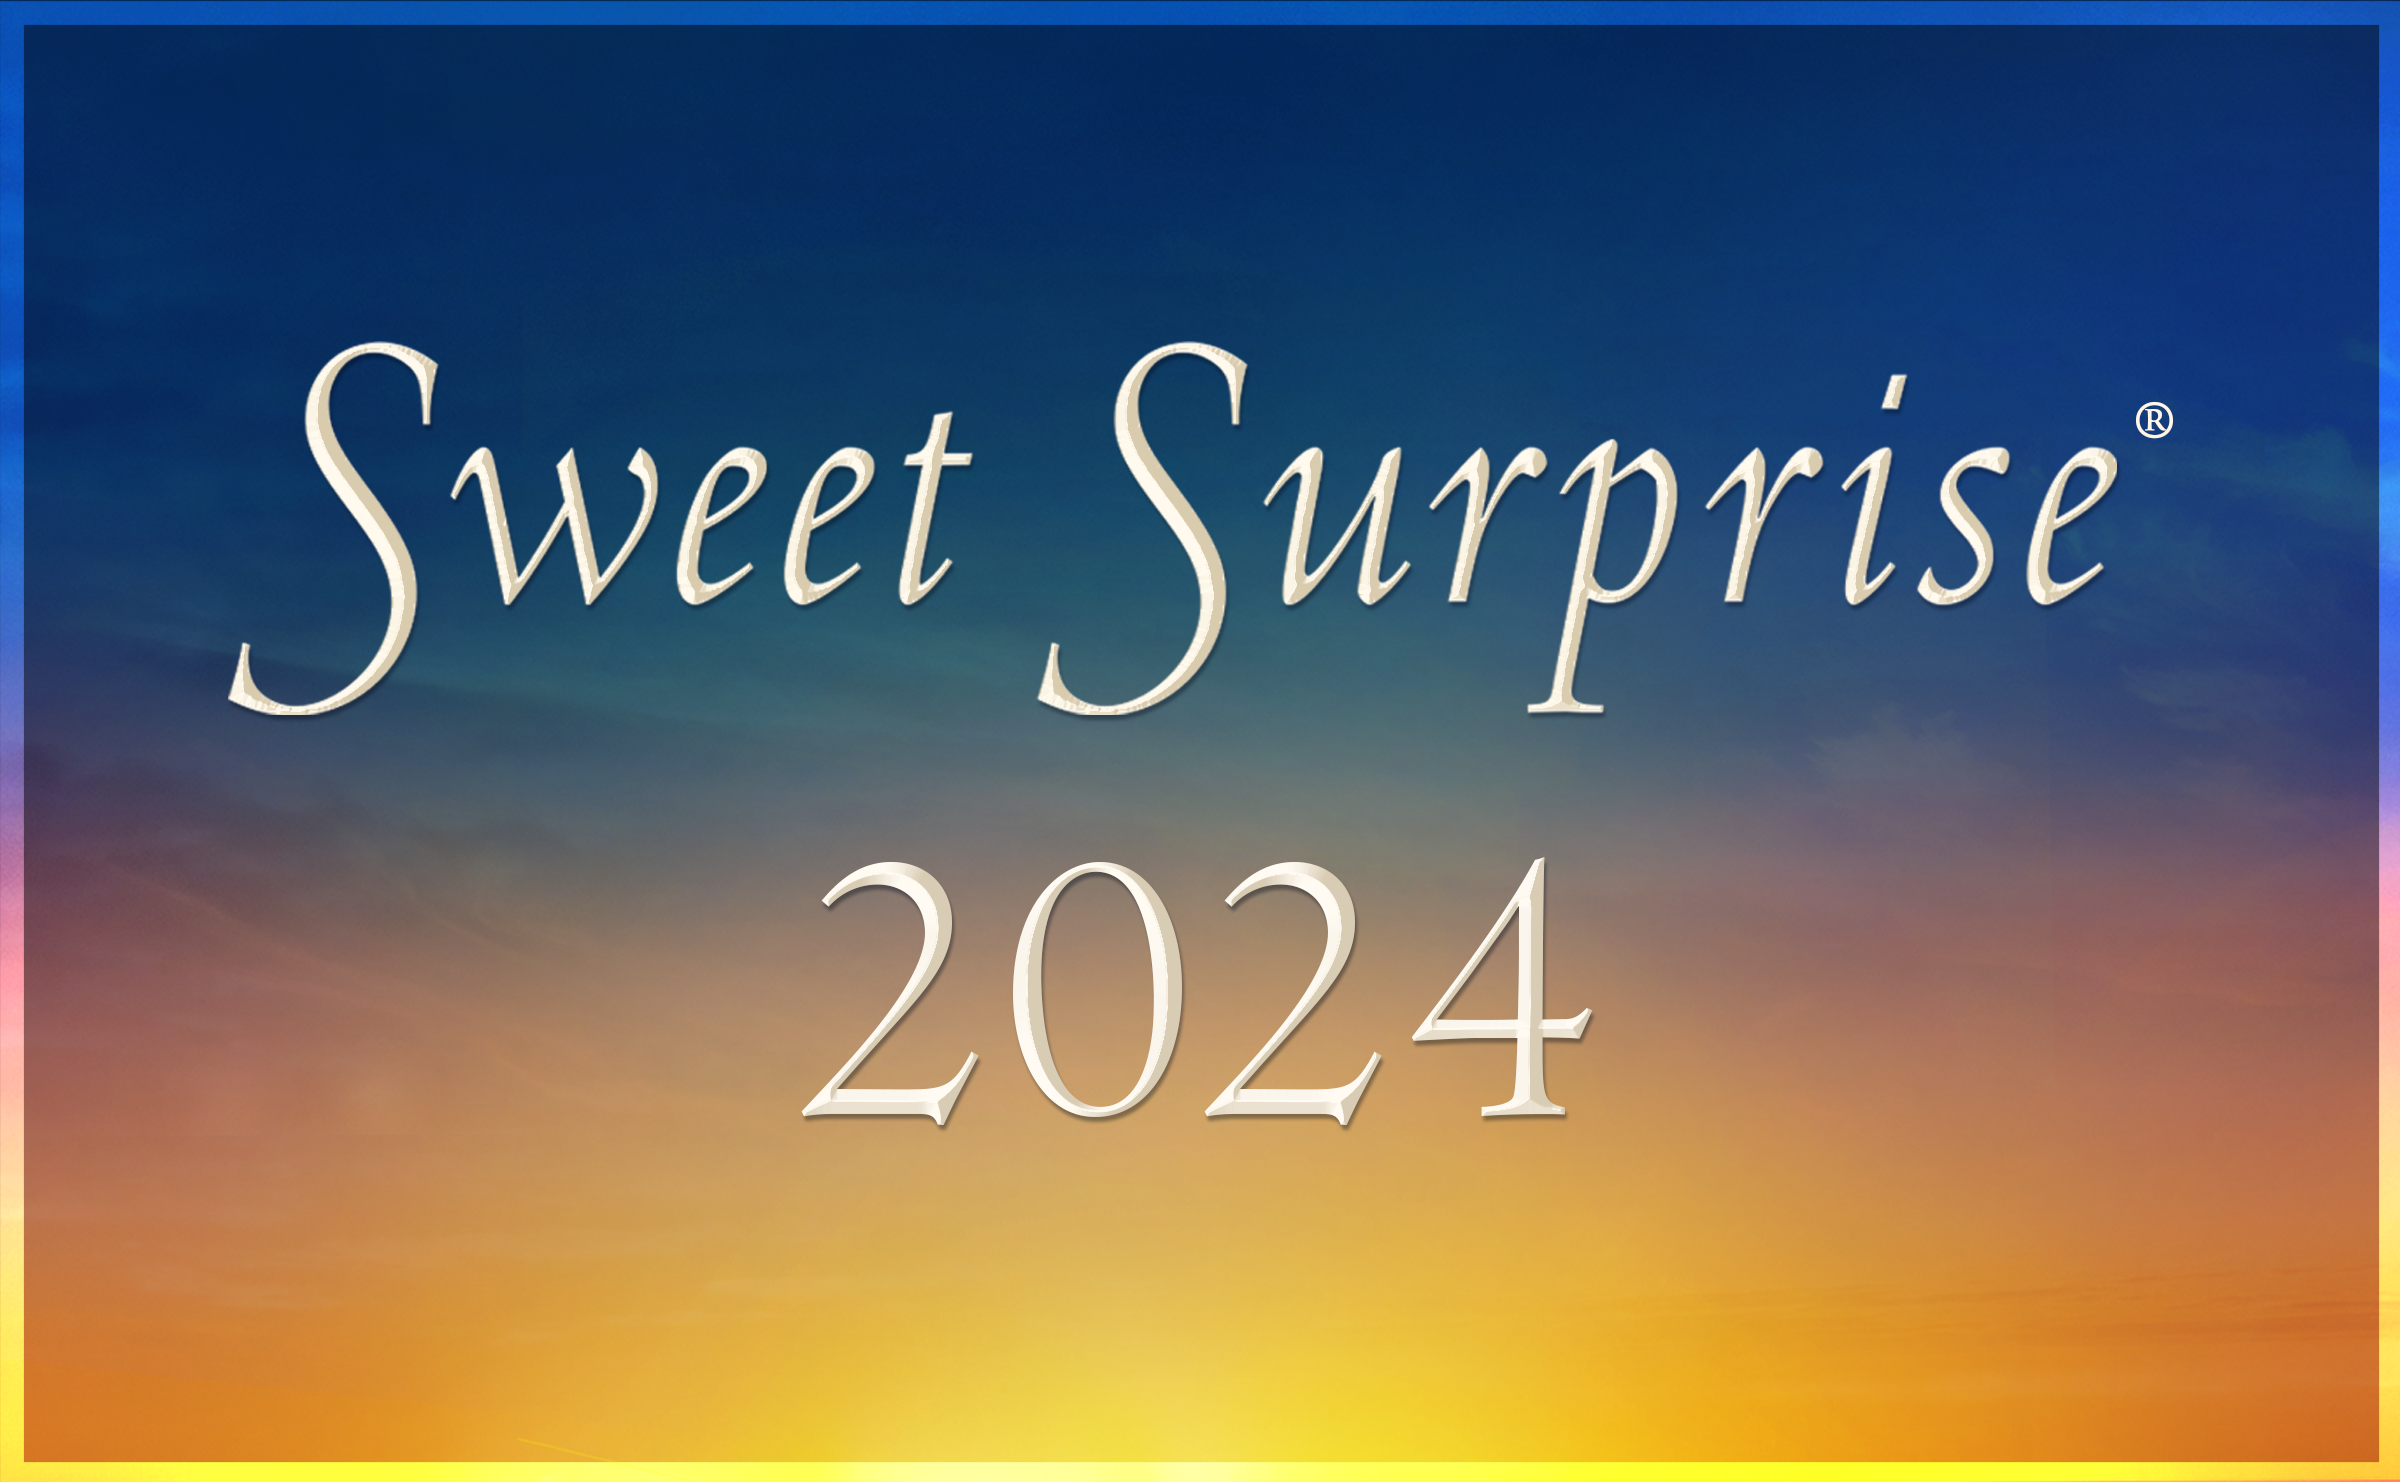 Sweet Surprise 2024